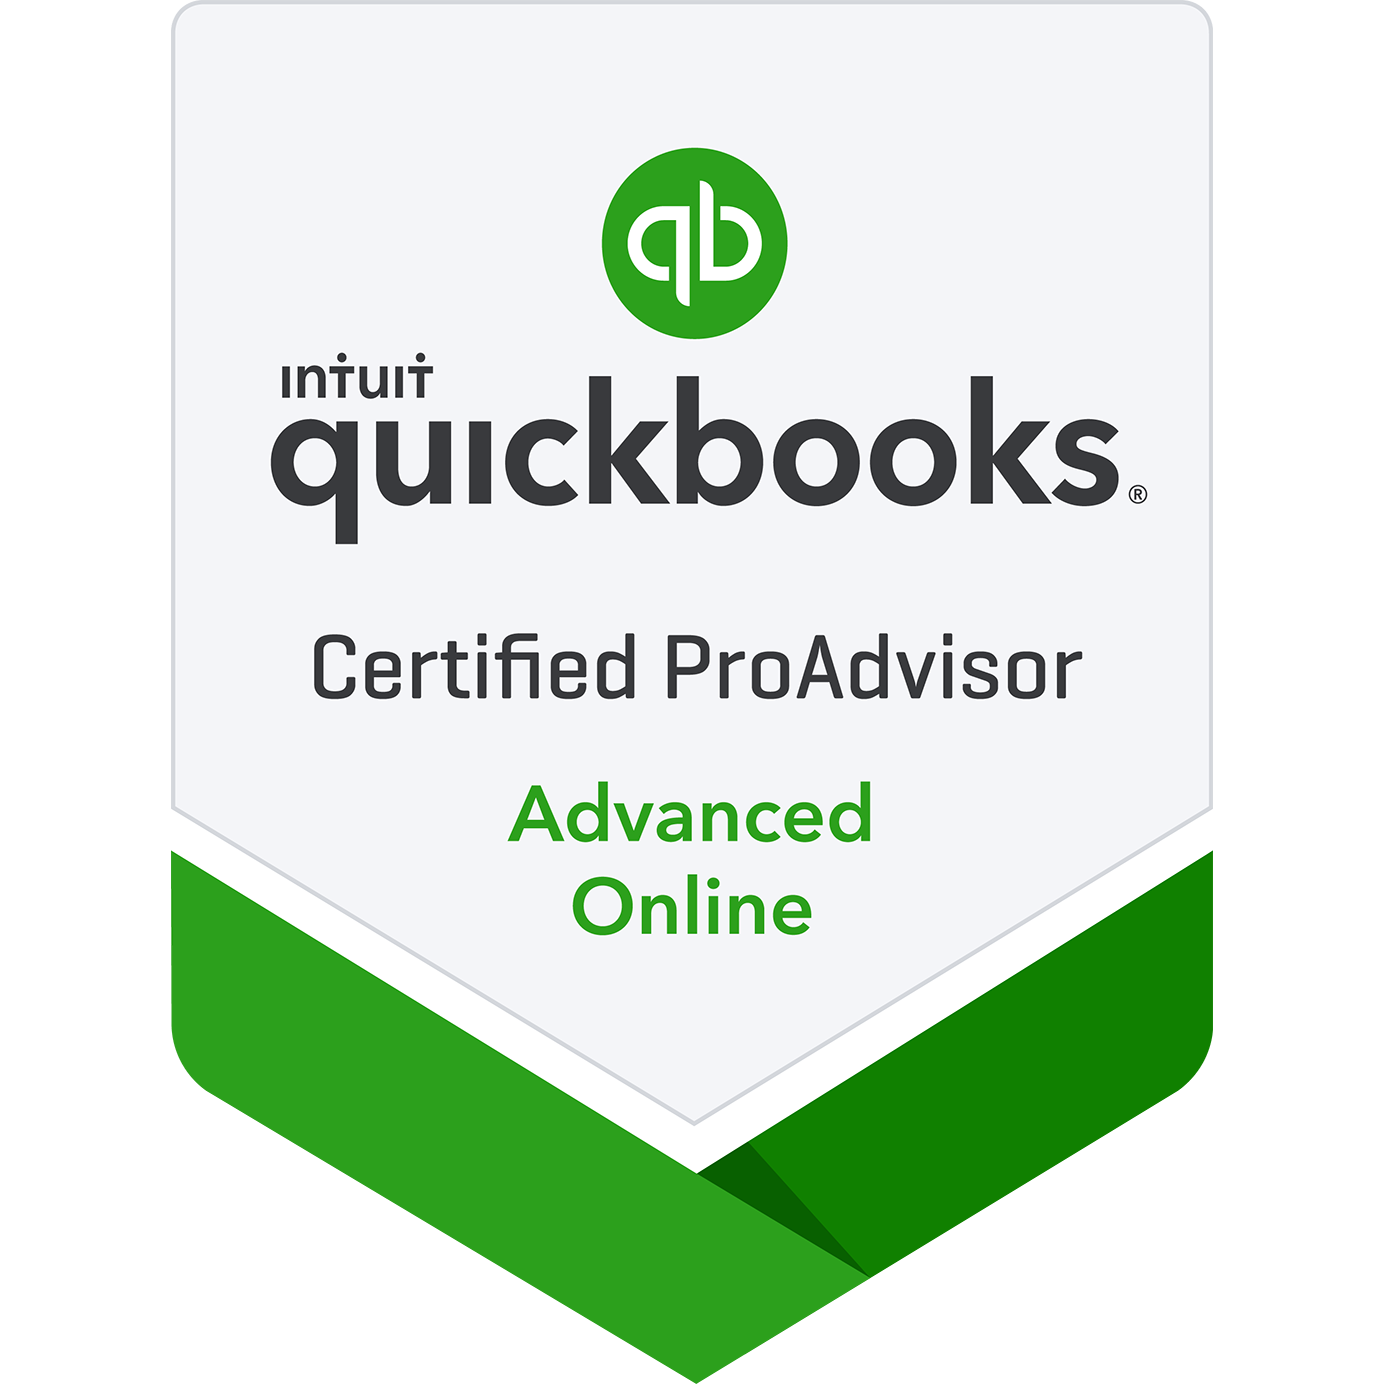 Quickbooks accreditation